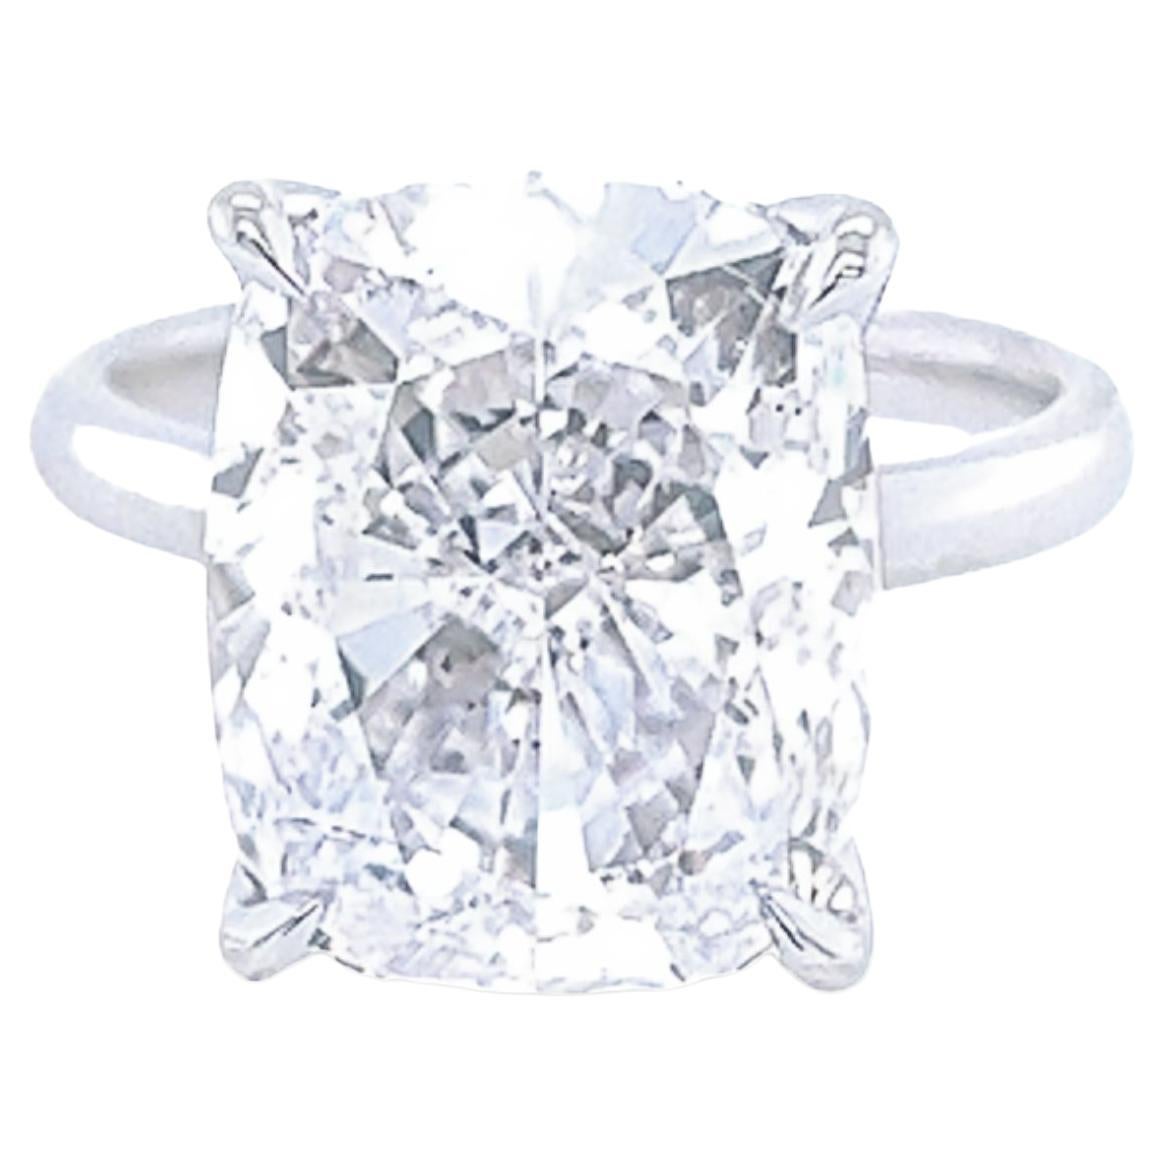 David Rosenberg 10.00 Carat Cushion G VS2 GIA Diamond Engagement Ring